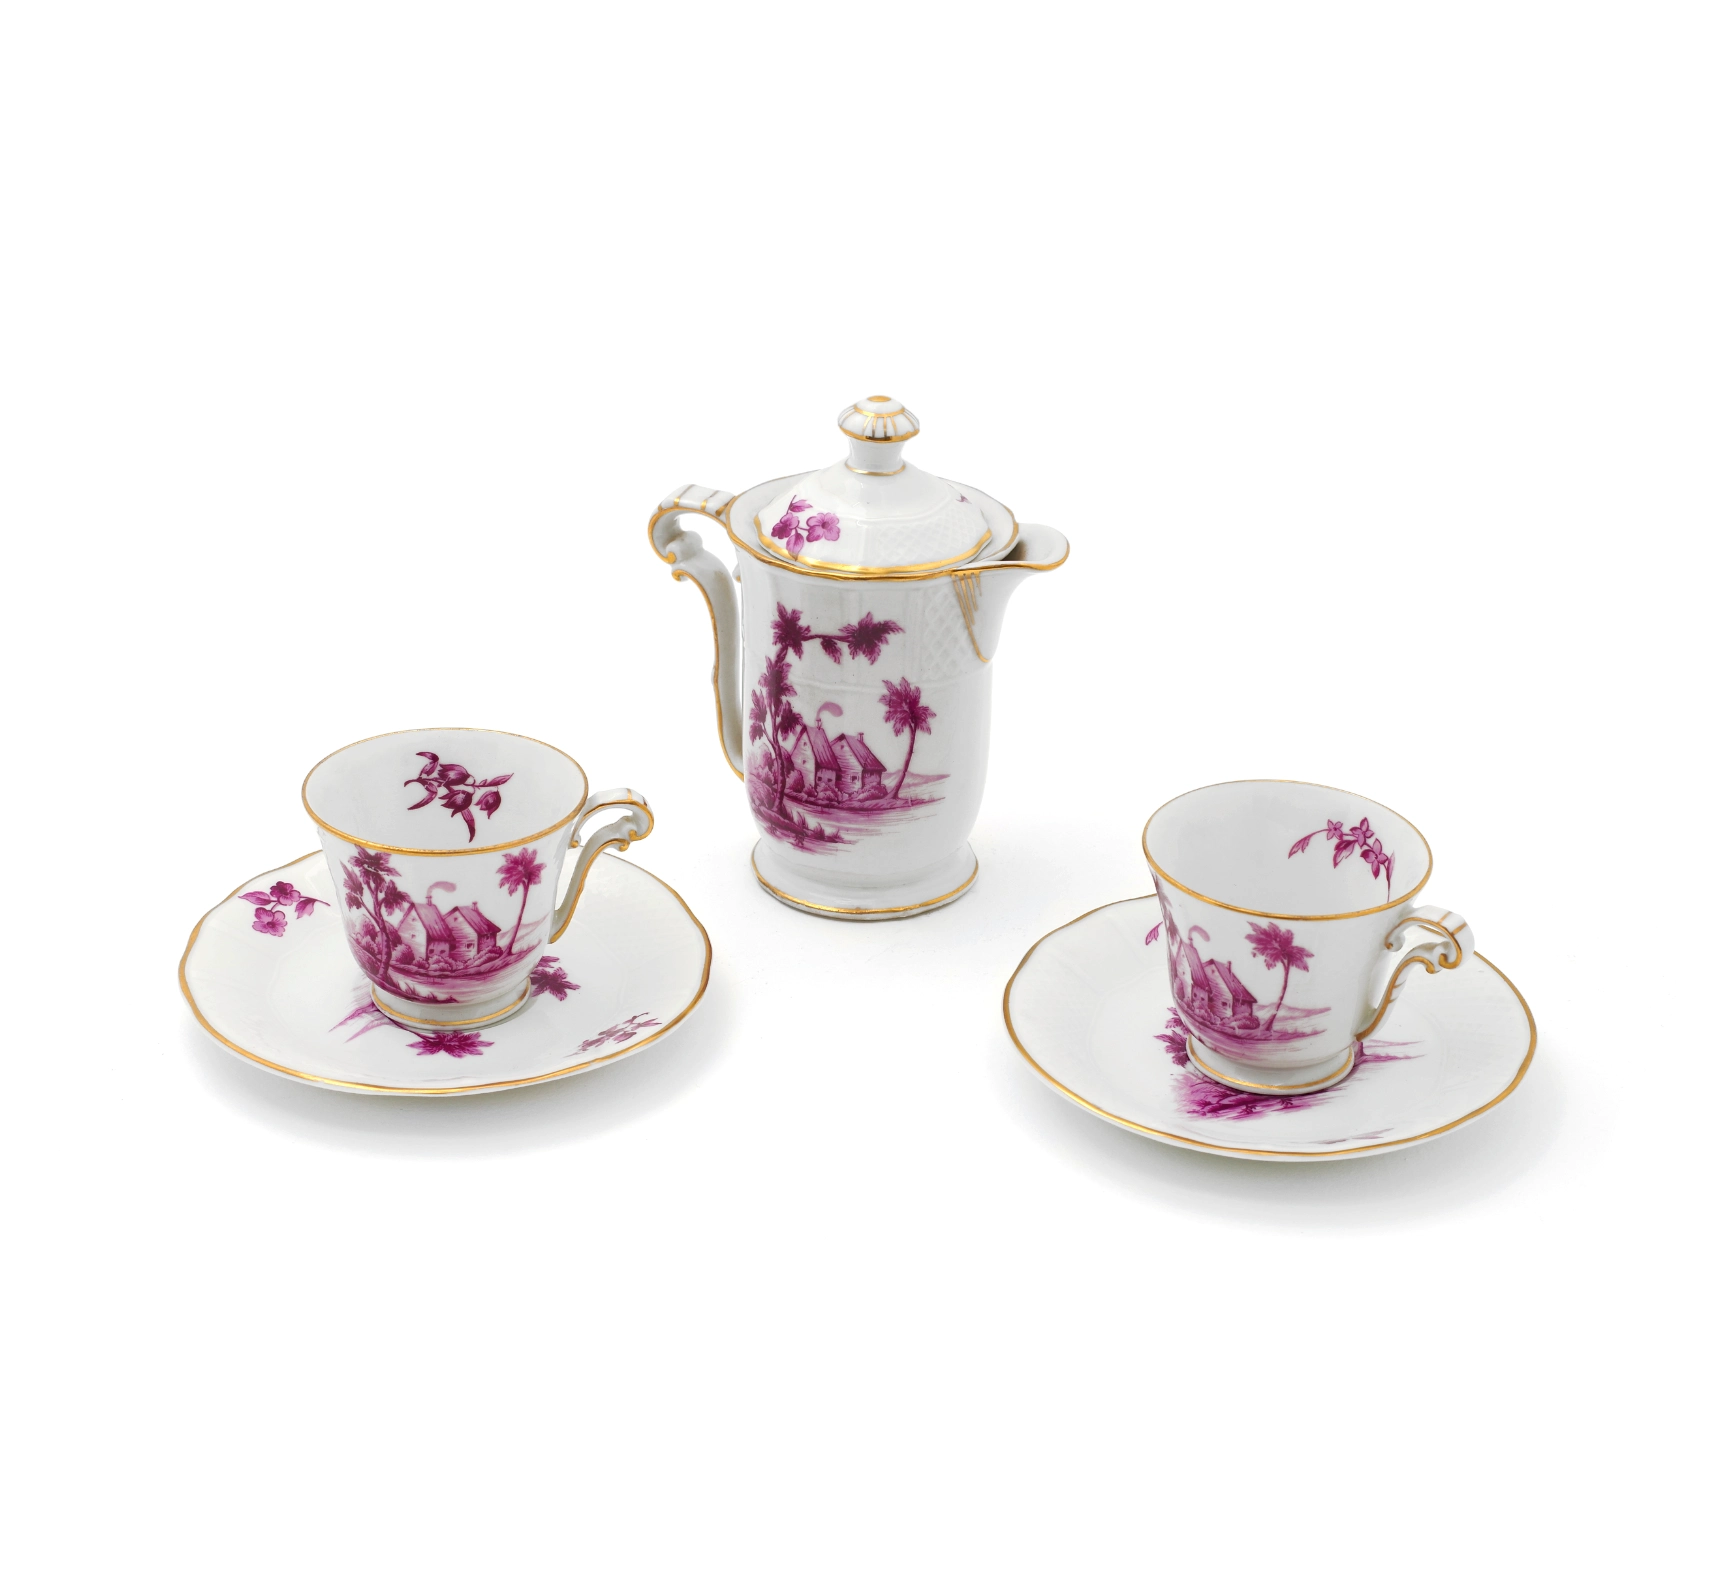 L. Bernardaud Limoges Porcelain Tea Set - All The Decor